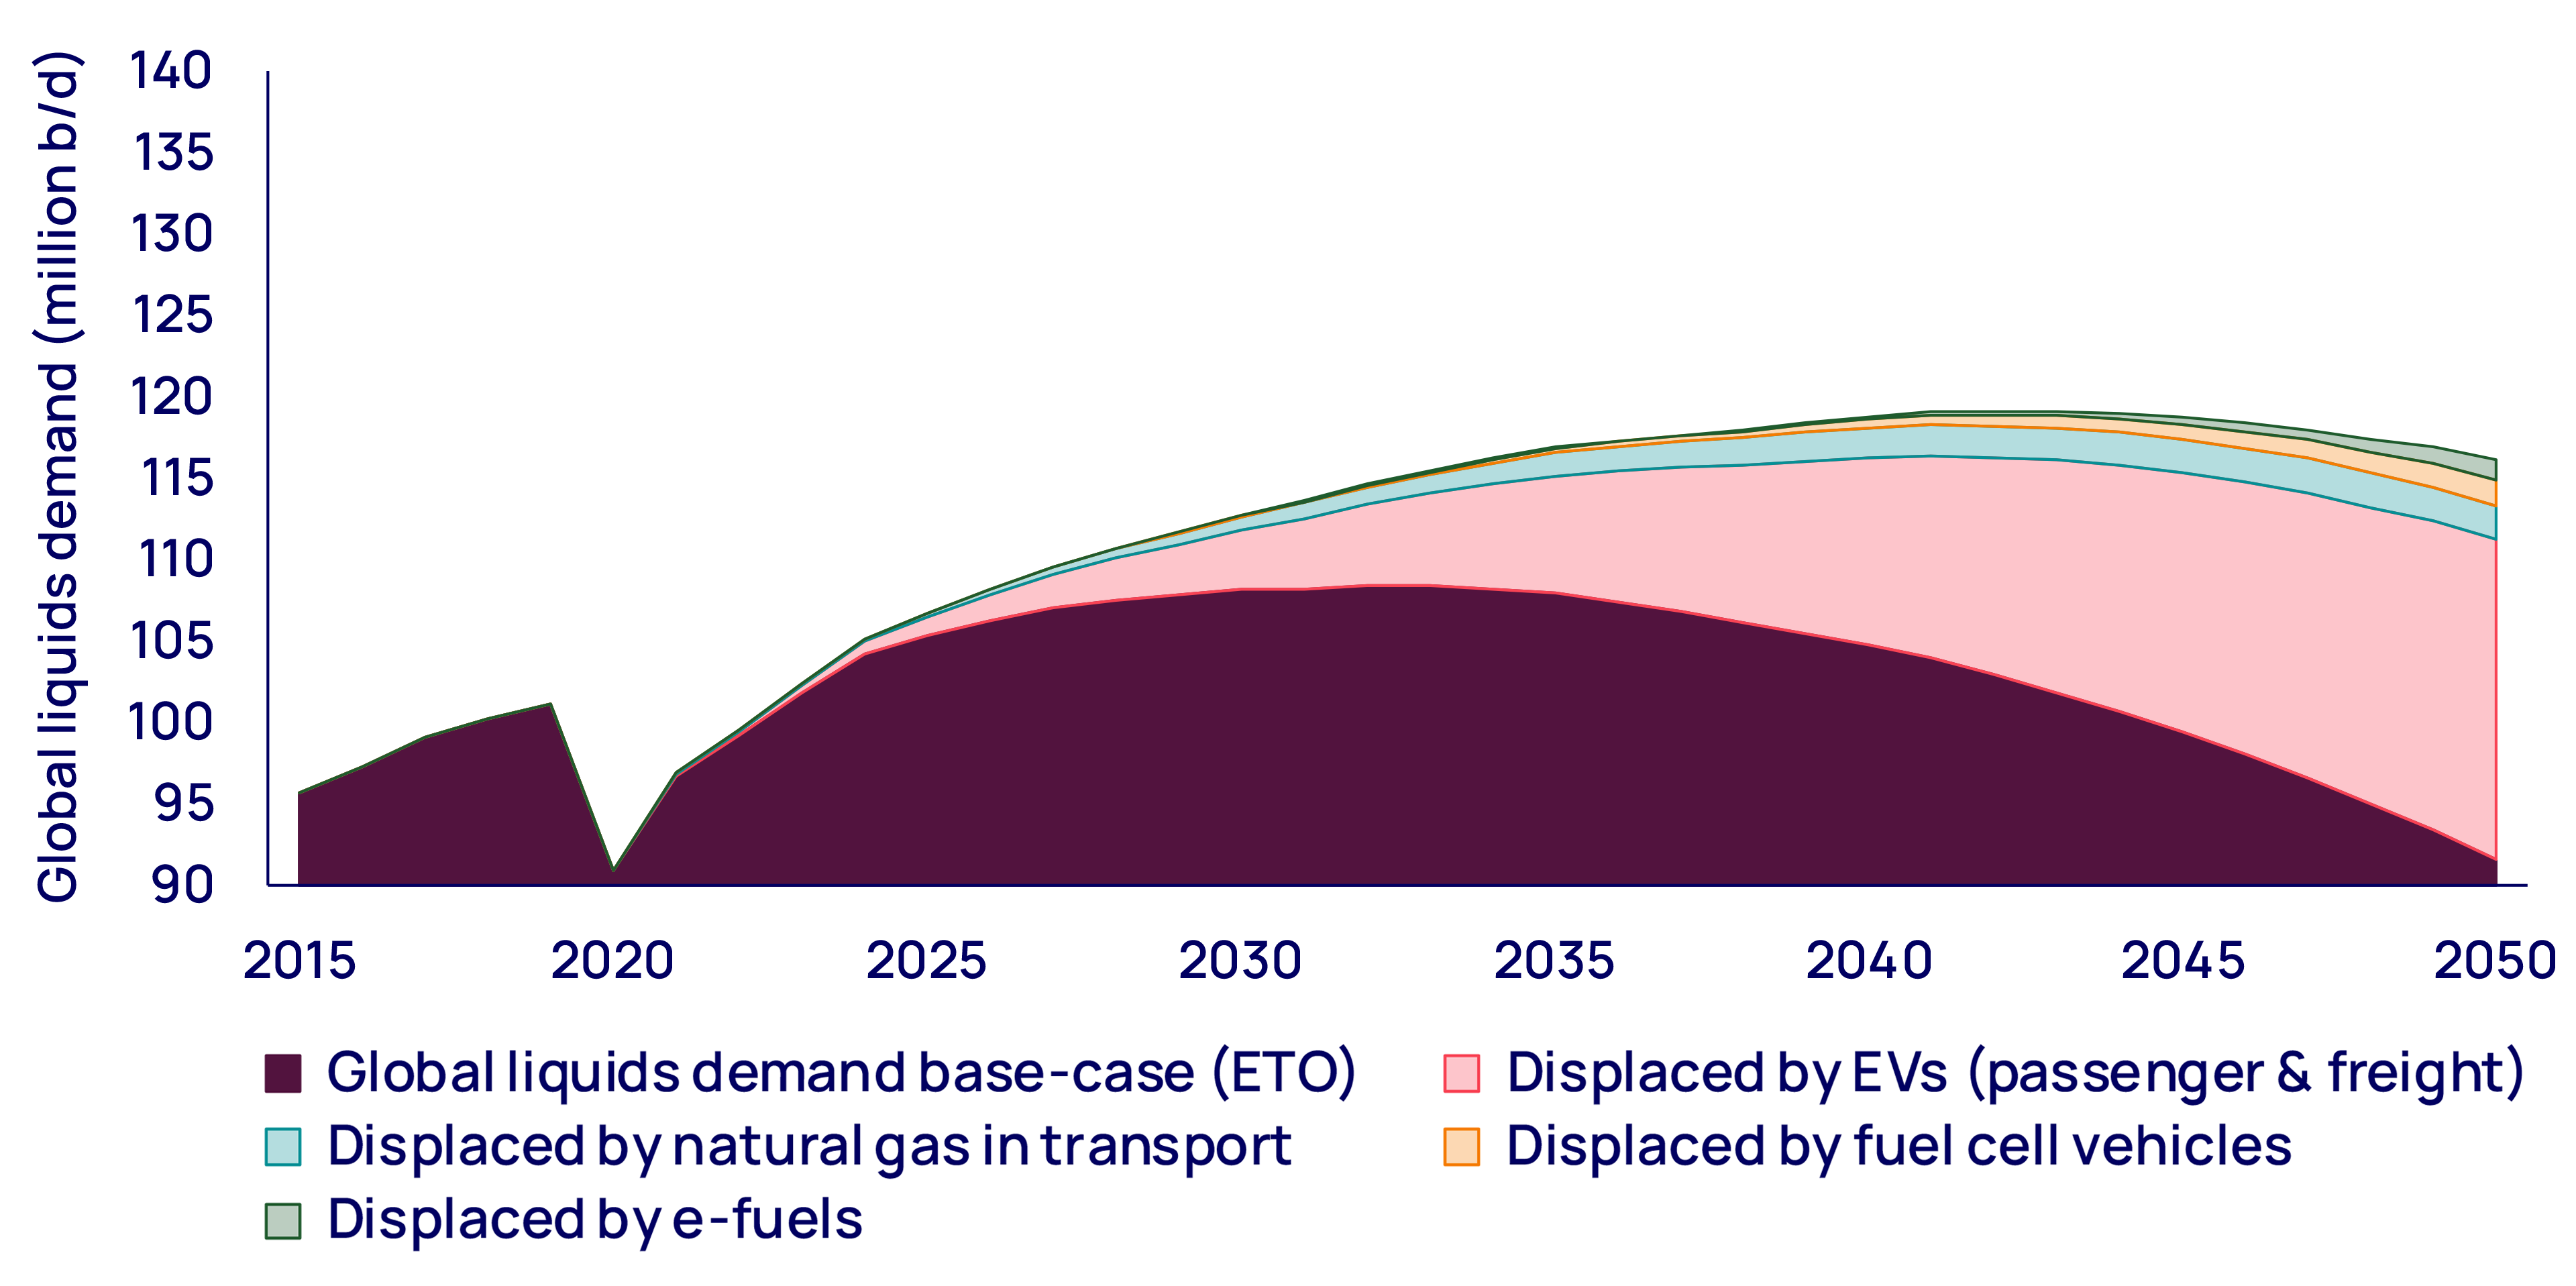 Base-case ETO liquids demand outlook to 2050 